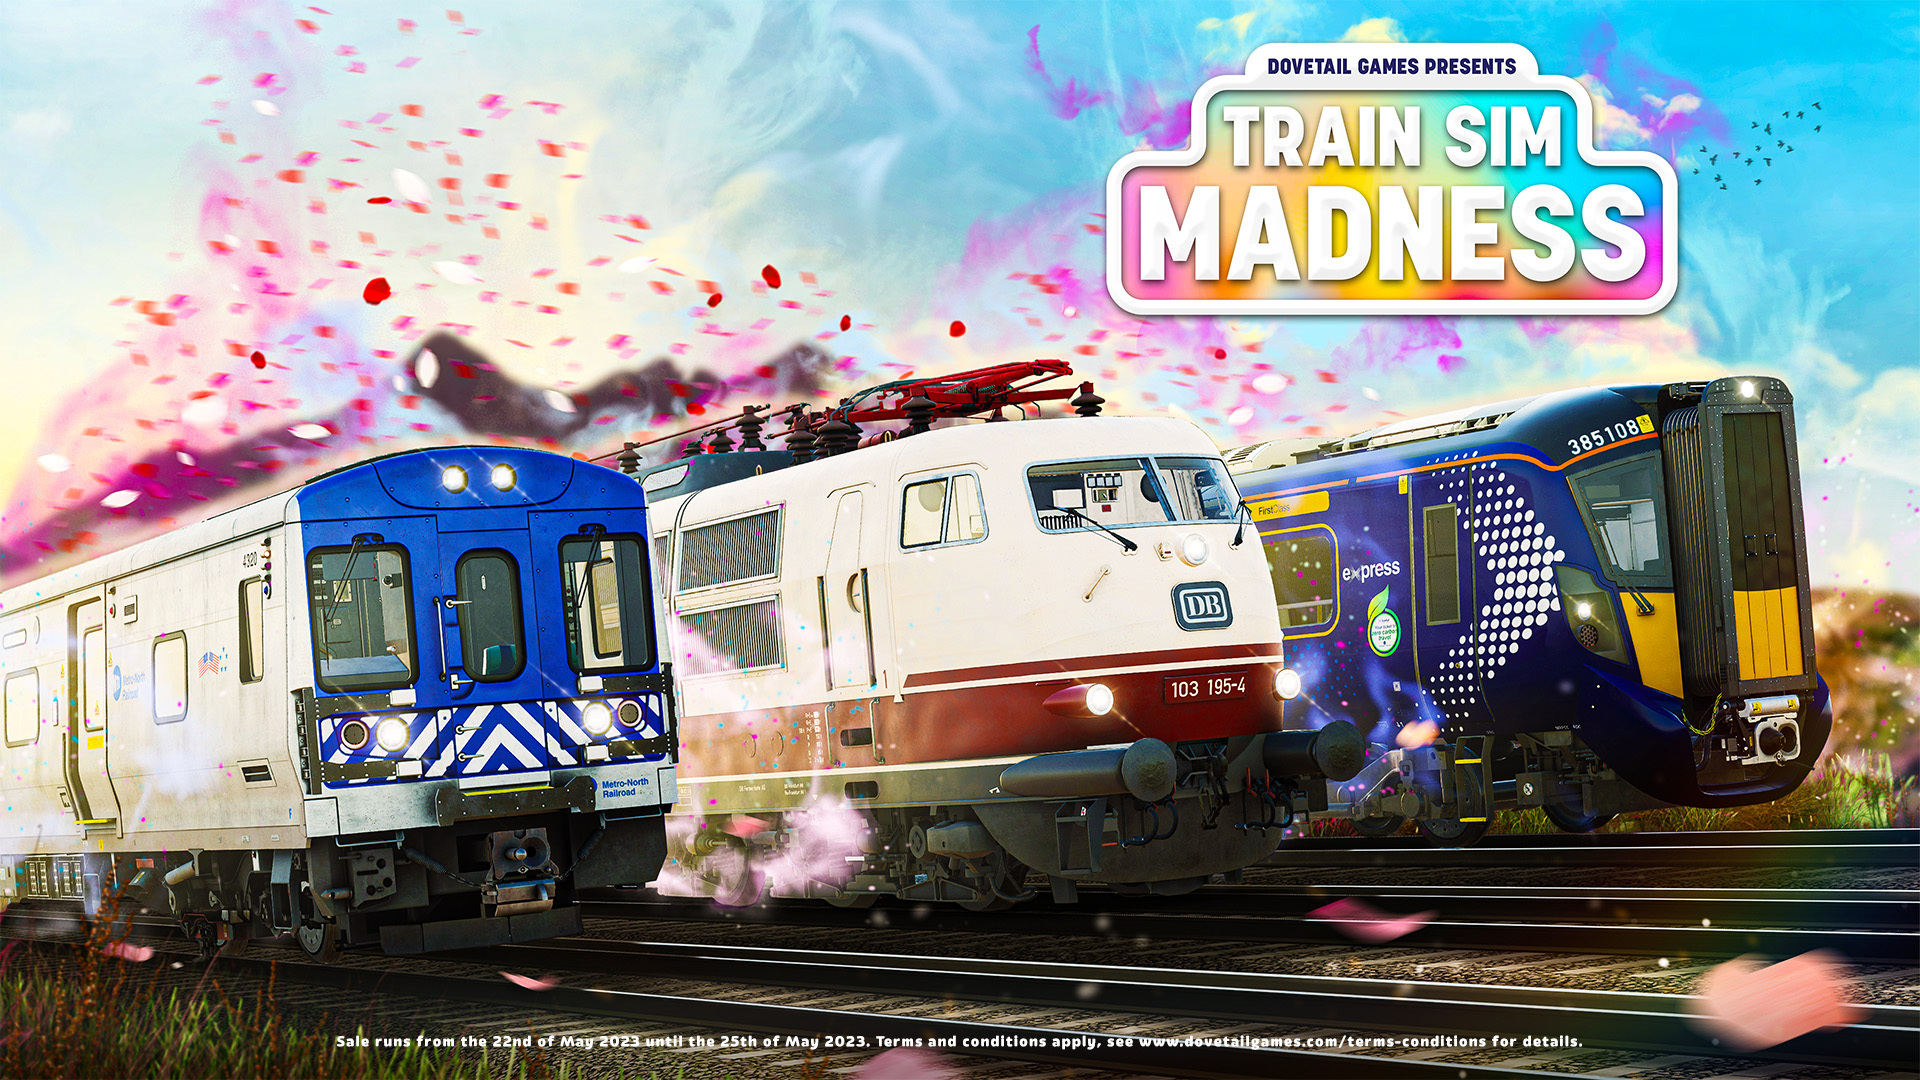 Train Sim Madness Sale Now On!